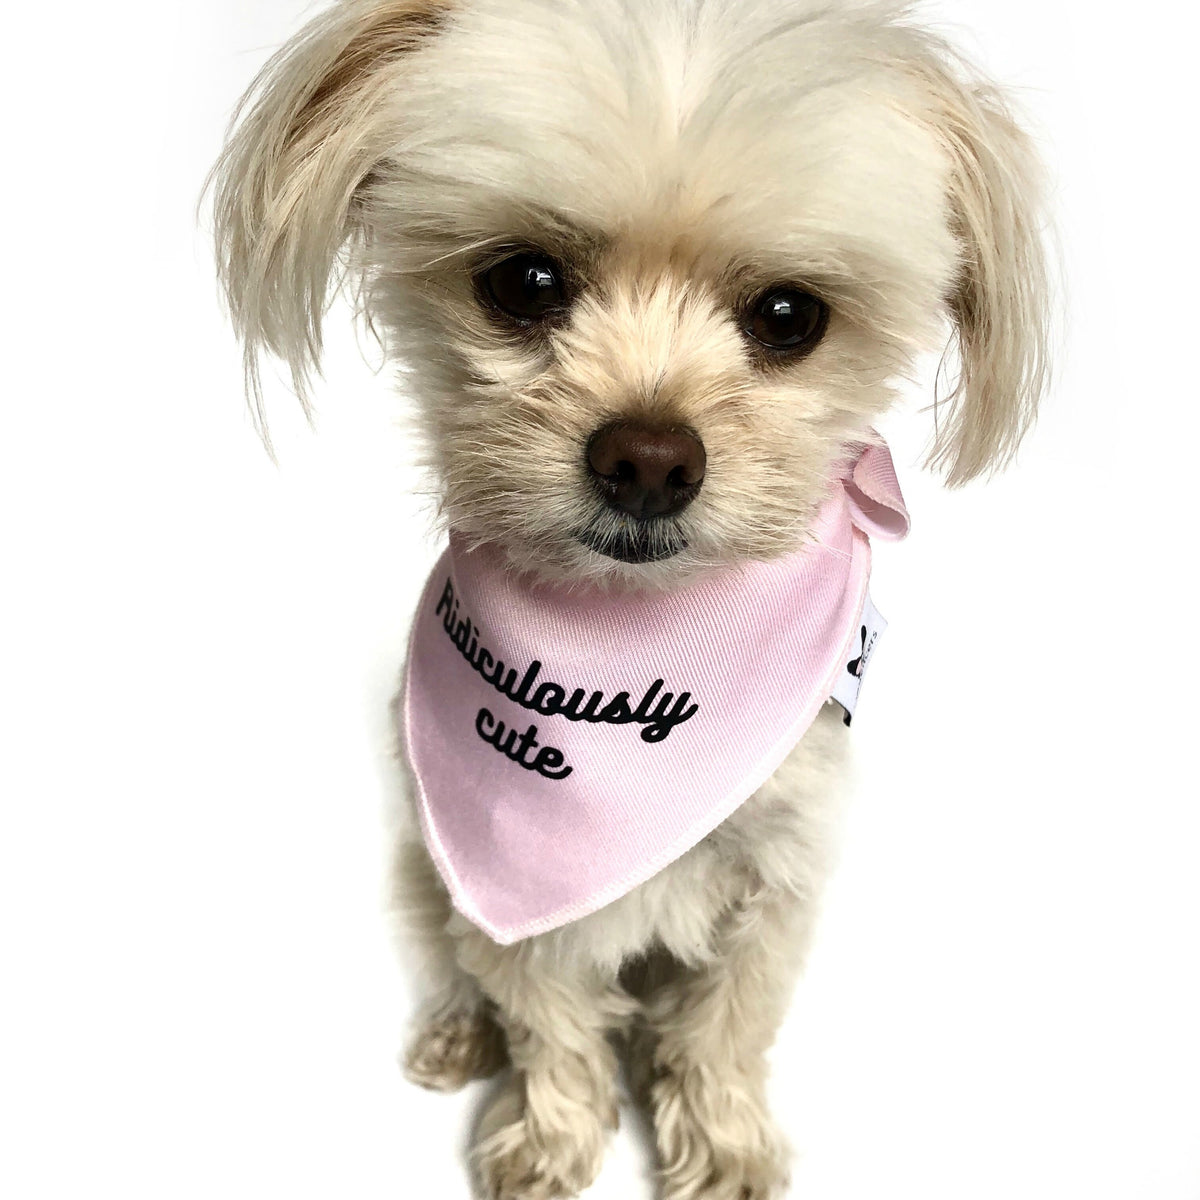 "Ridiculously cute" Pink Dog Bandana - Dog Influencers